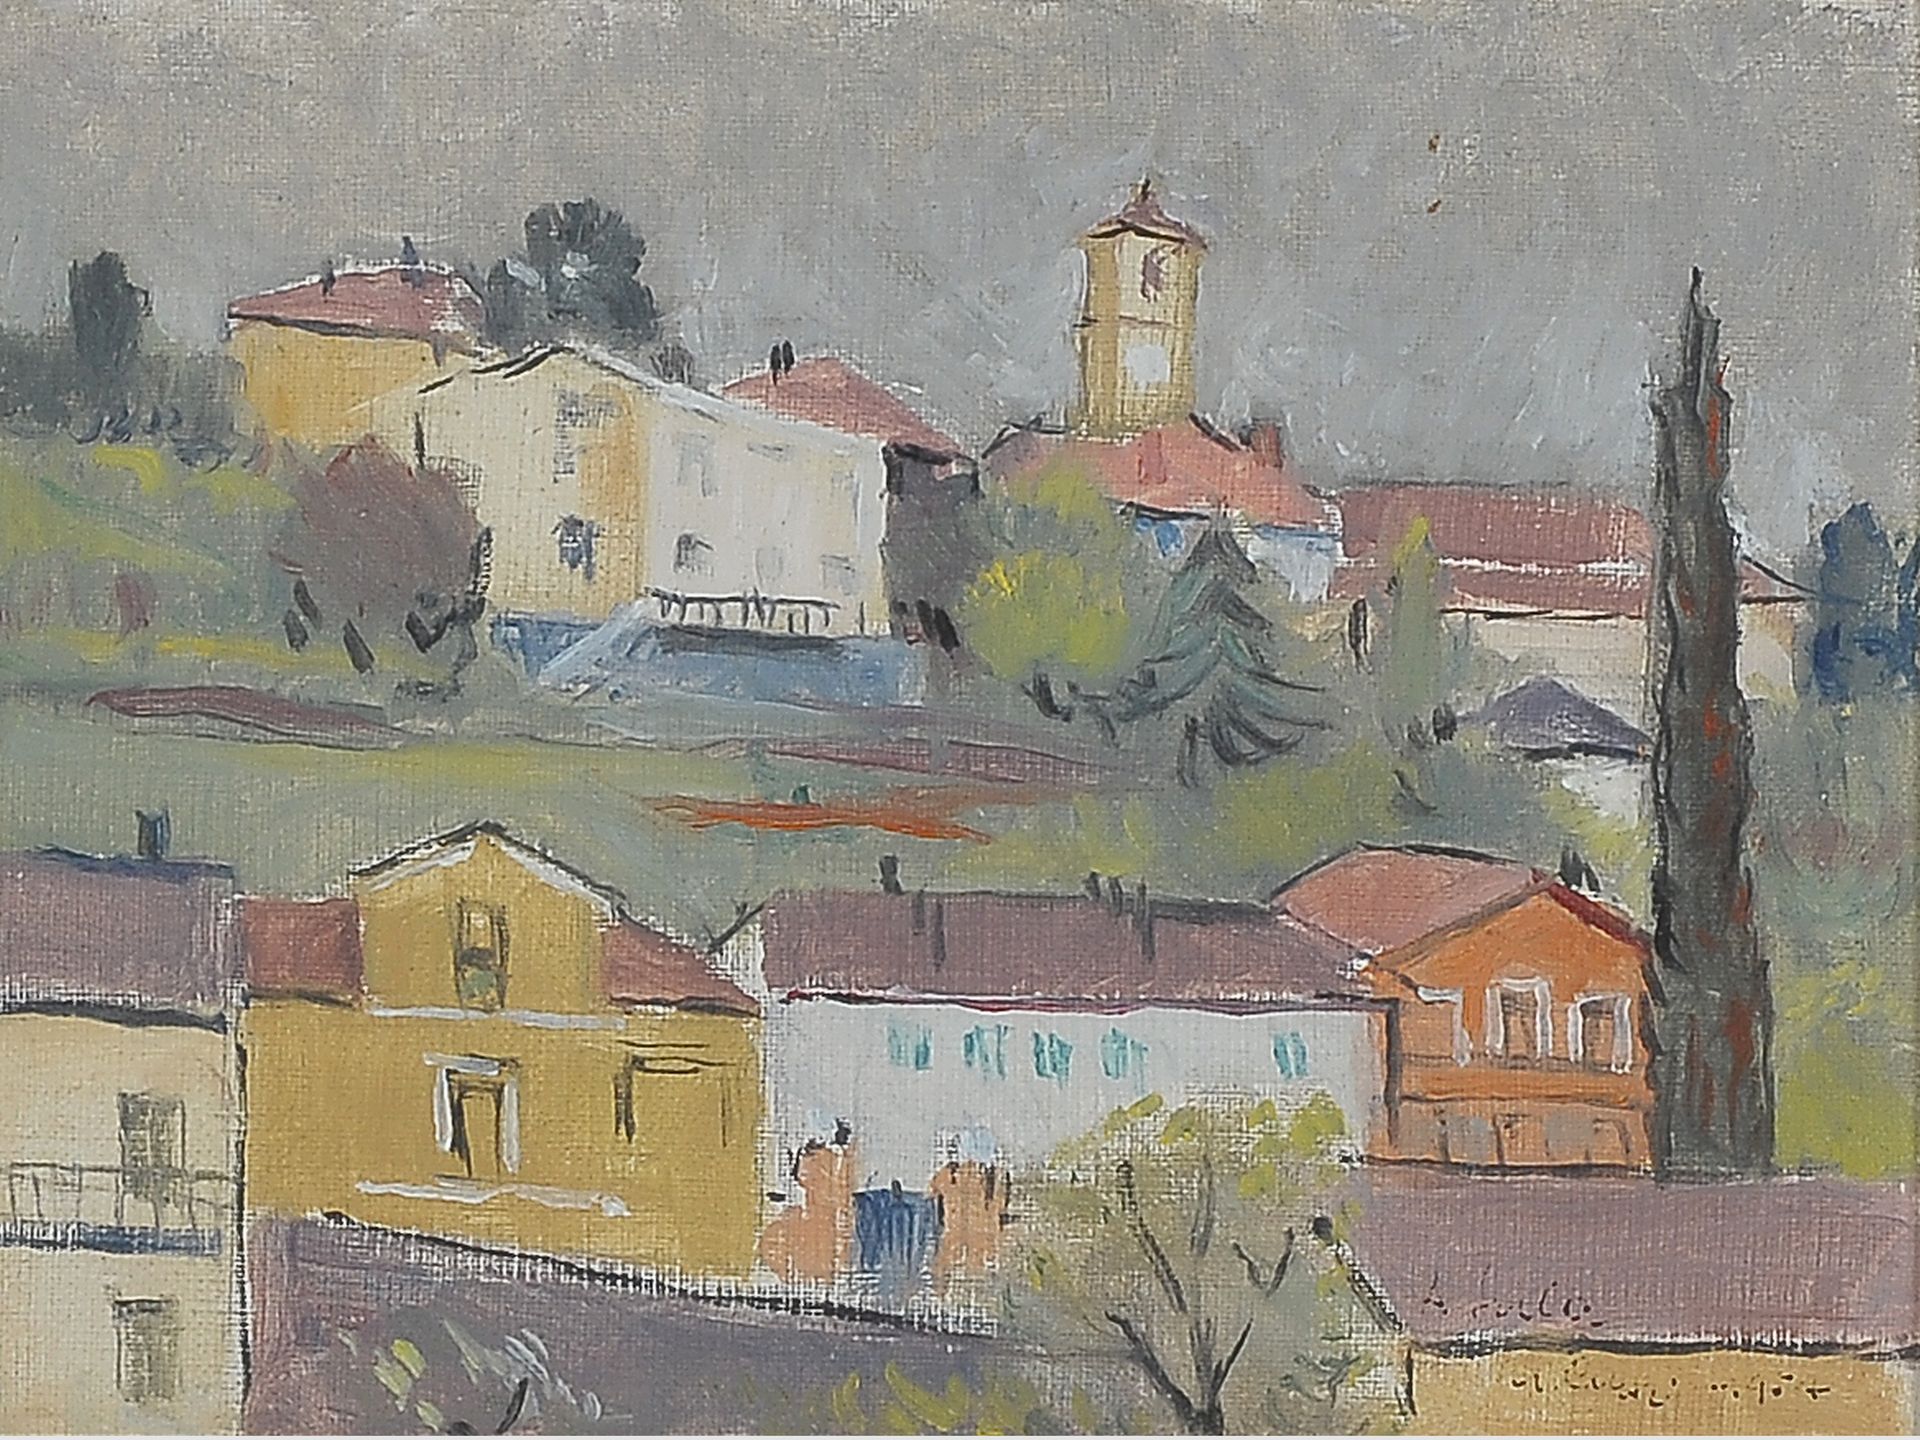 Null 翁贝托-库齐


出生于1891年


乡村风景


板上油彩


15 x 20 cm


有签名，左上角。